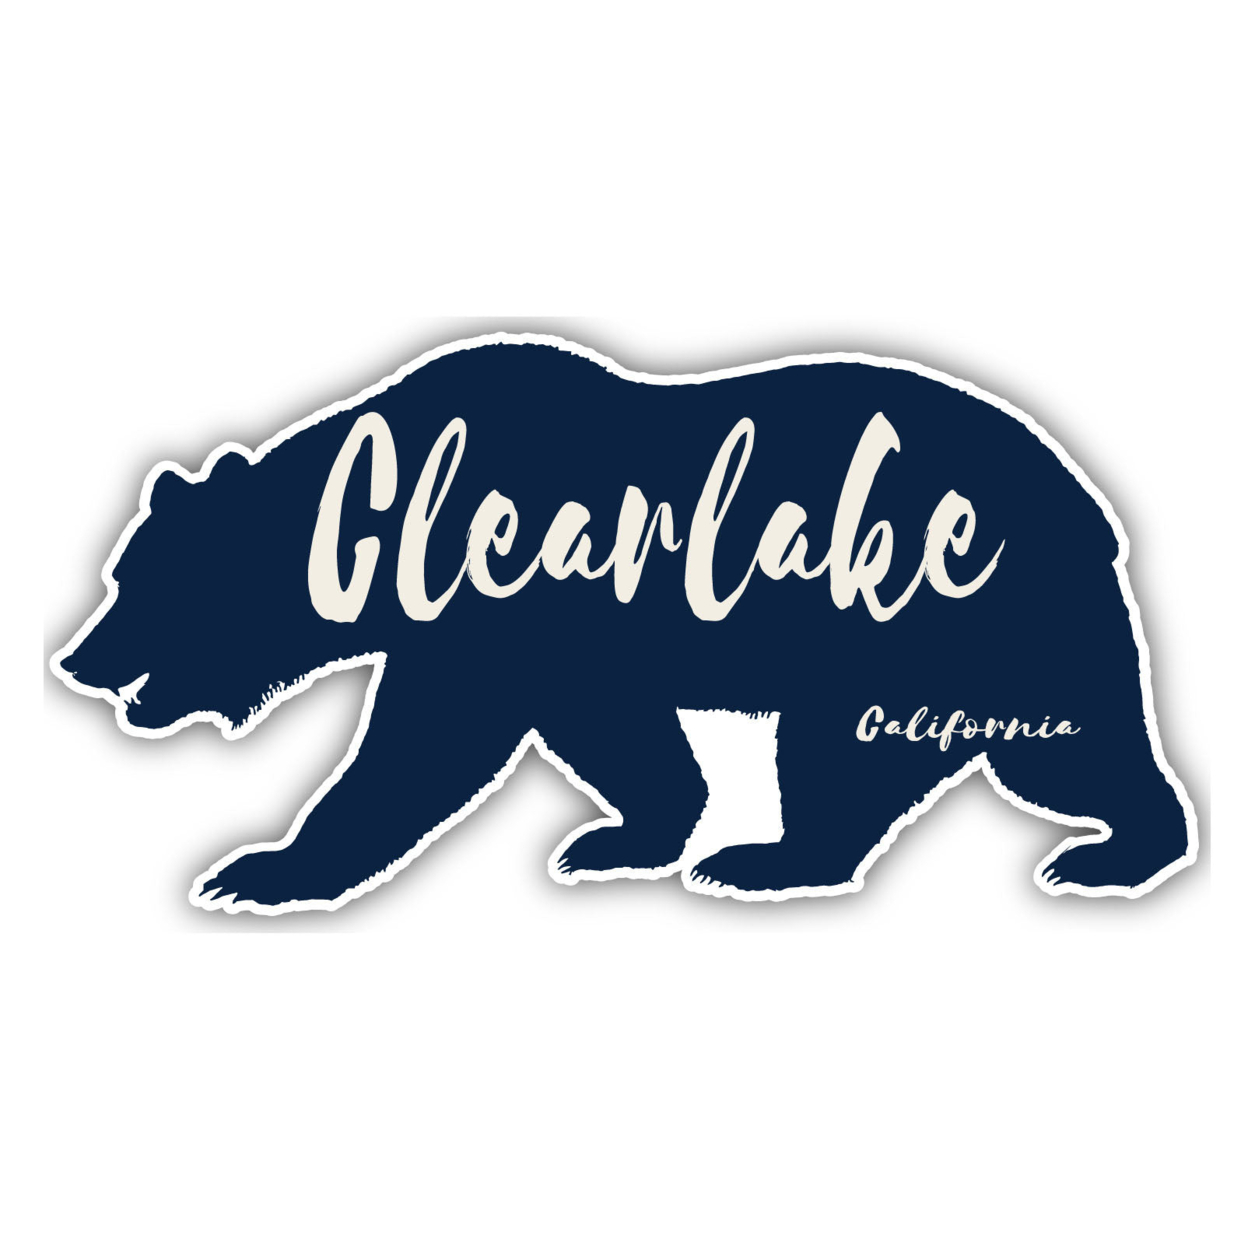 Clearlake California Souvenir Decorative Stickers (Choose Theme And Size) - Single Unit, 10-Inch, Tent